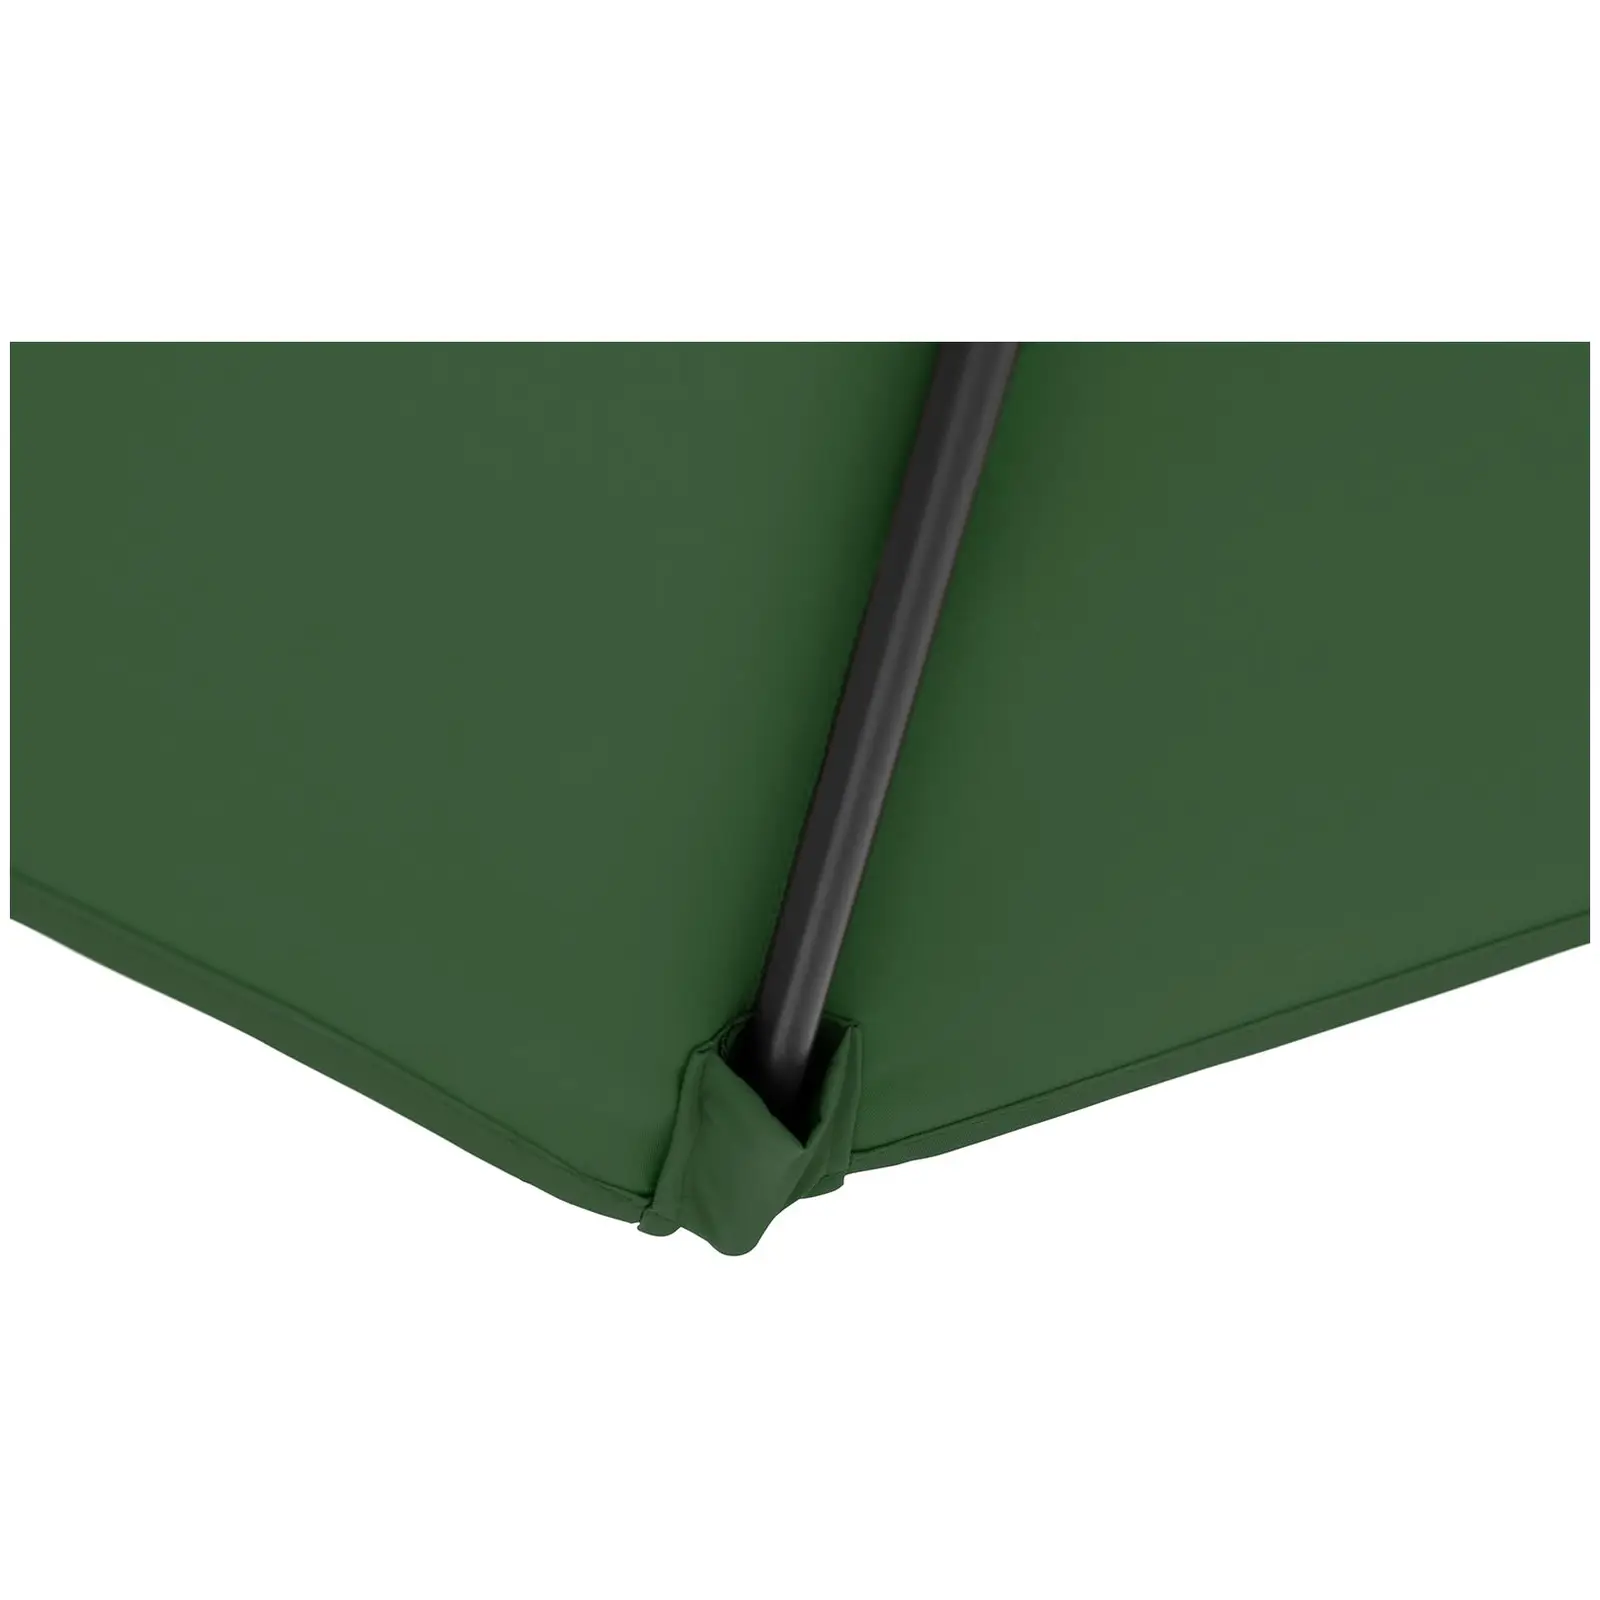 Sombrilla grande - verde - hexagonal - Ø 300 cm - inclinable